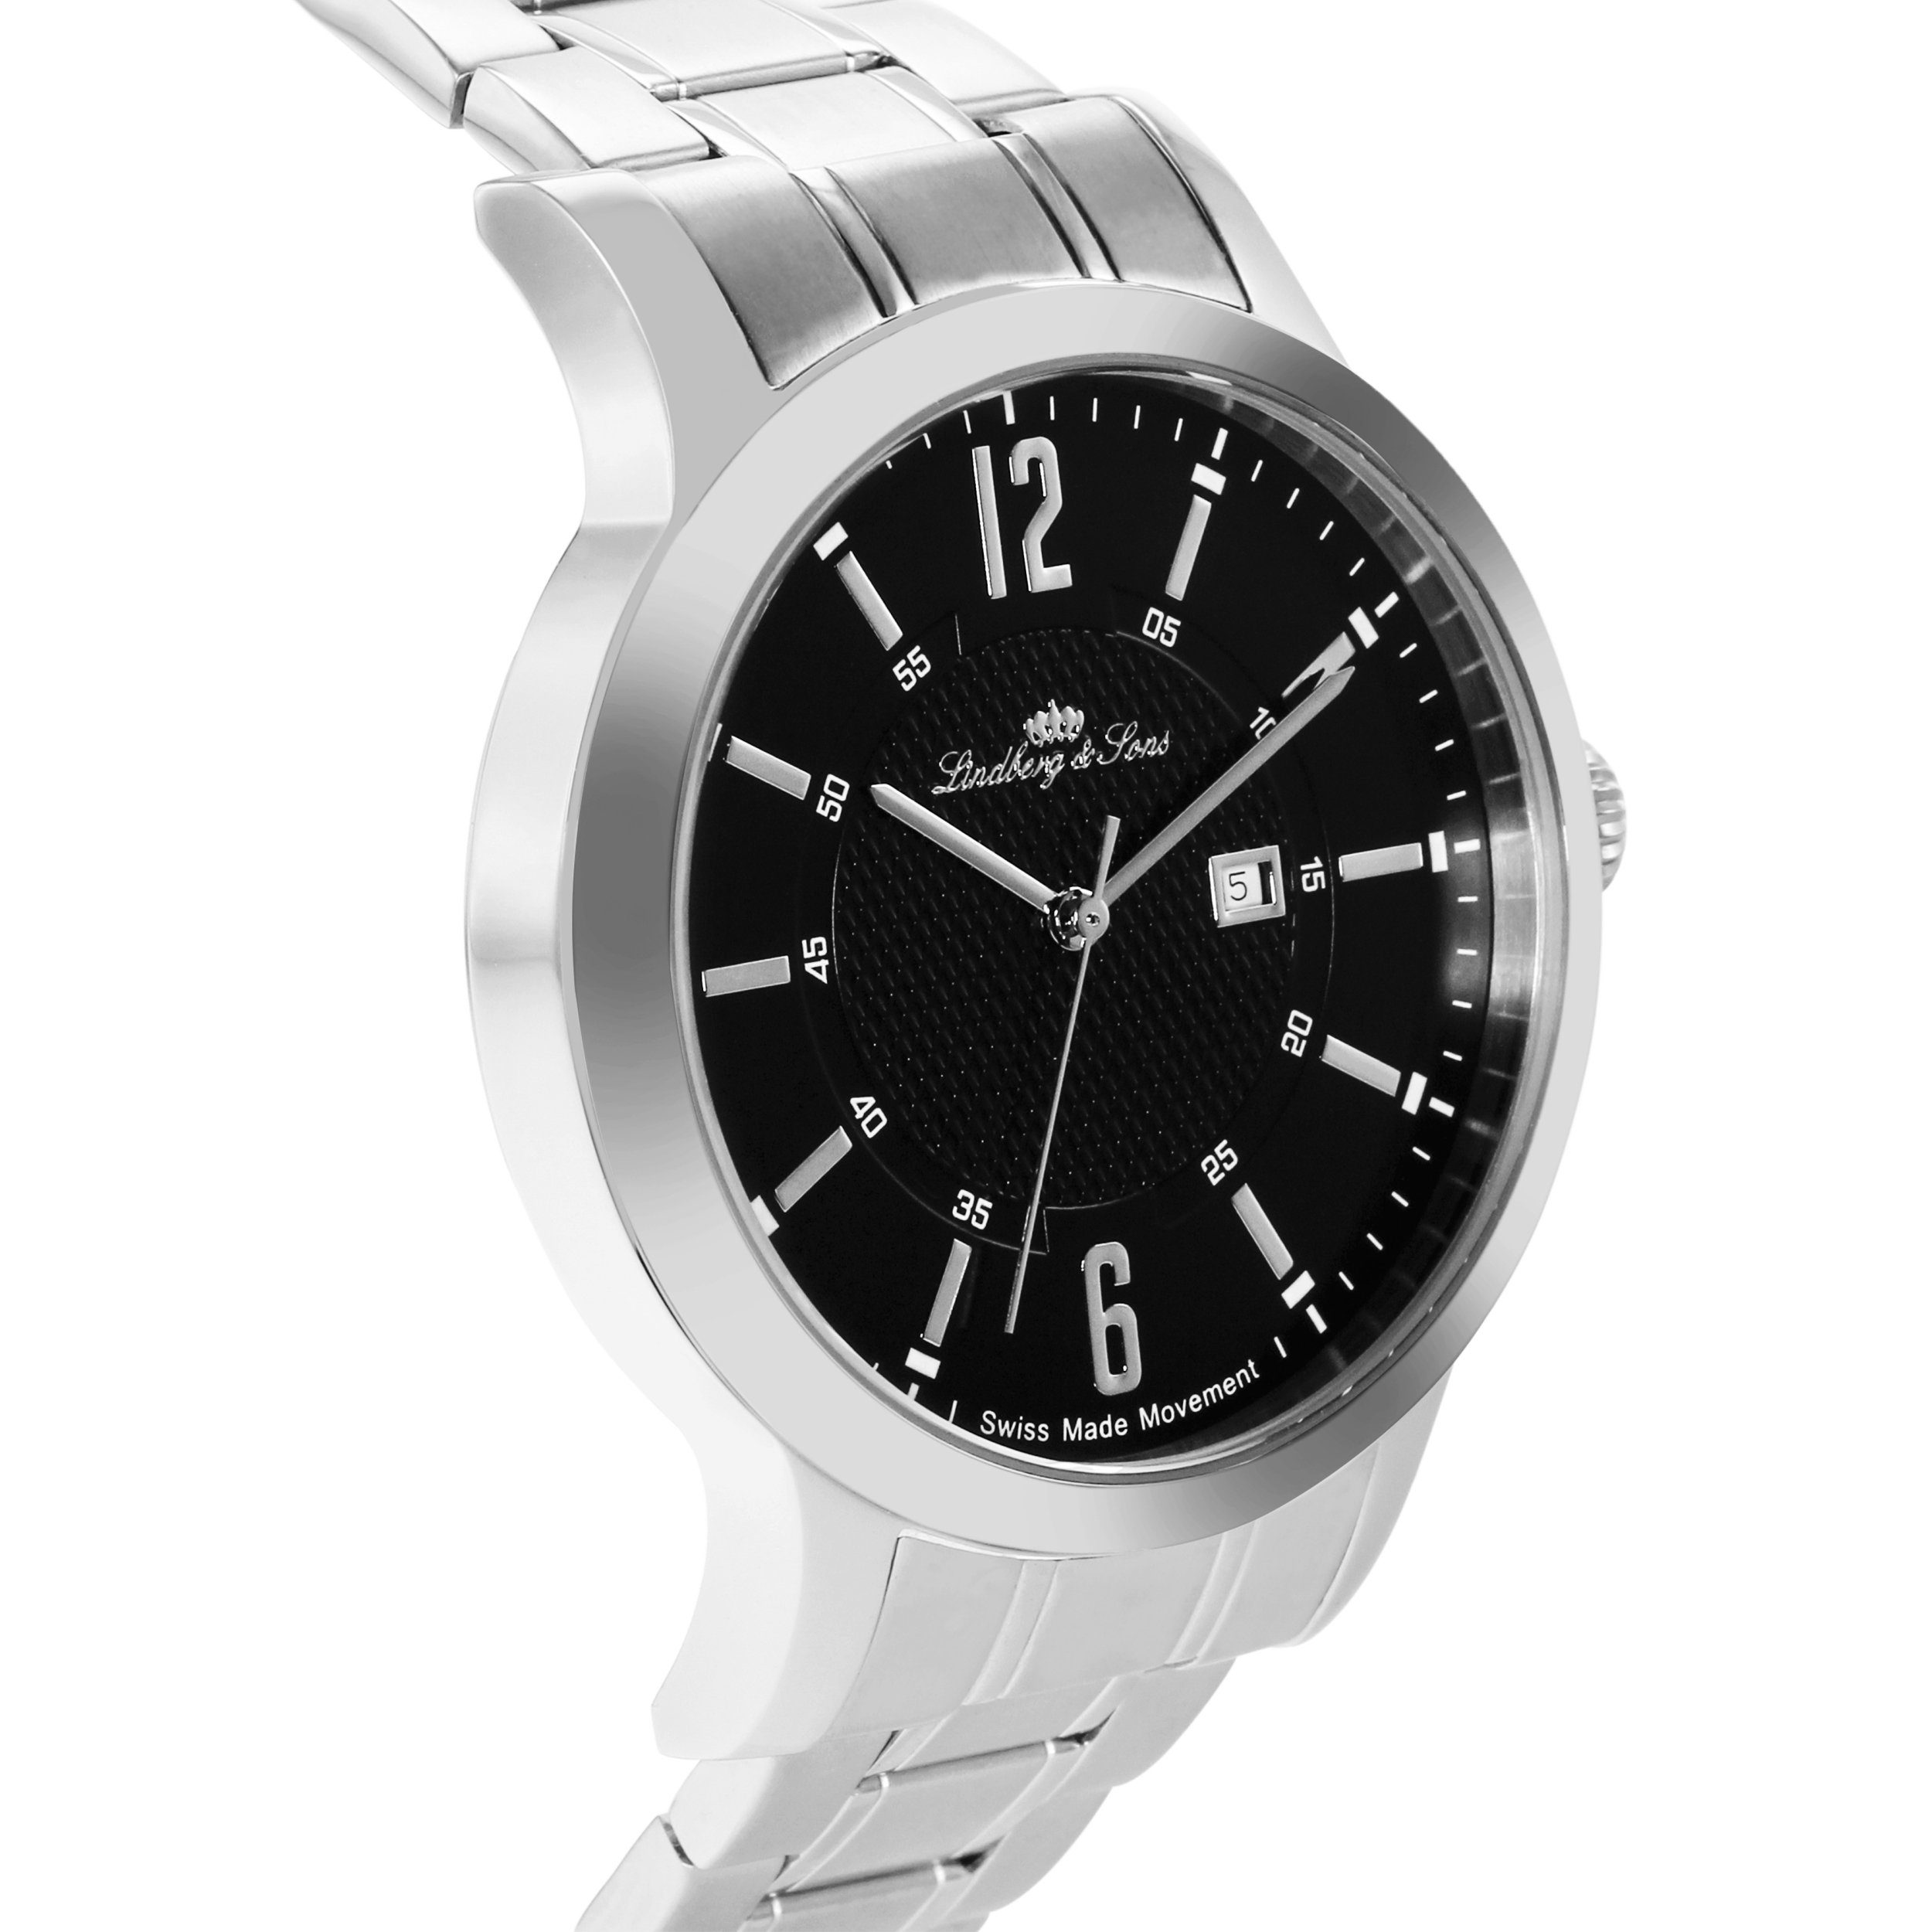 Stil und elegantem Lindberg&Sons Armband graziösem Uhr Quarzuhr mit